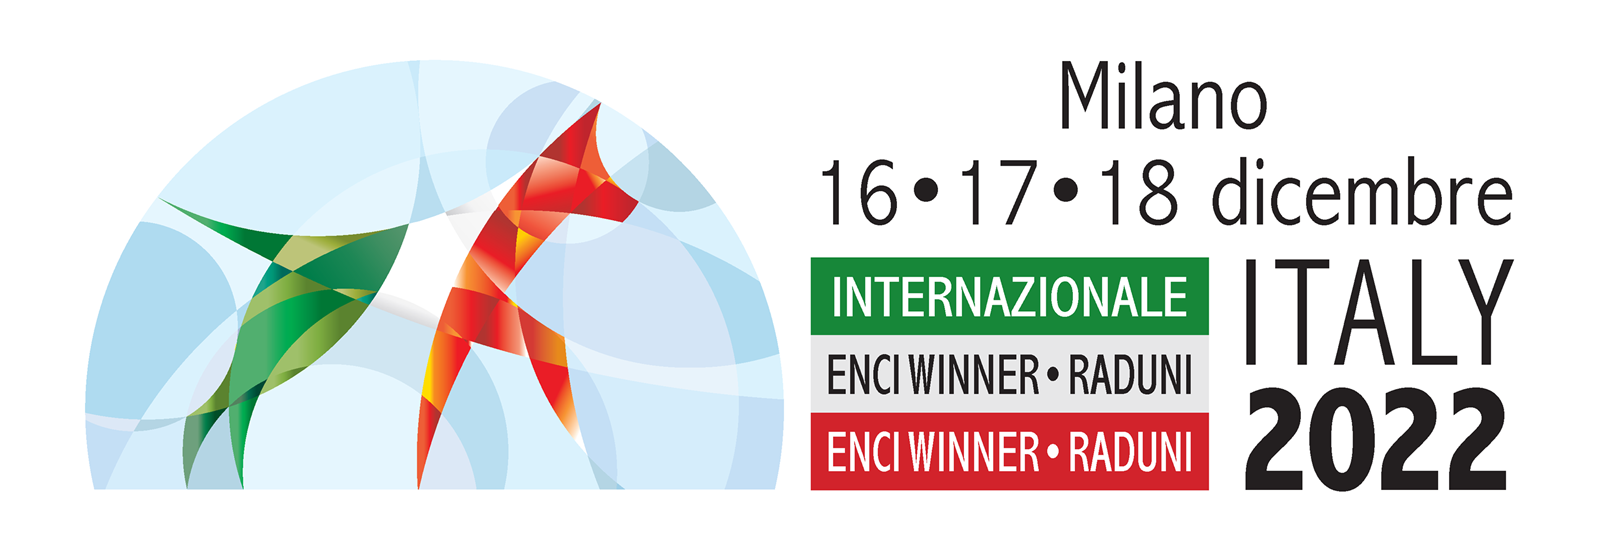 Enci winner 2022 - Milano